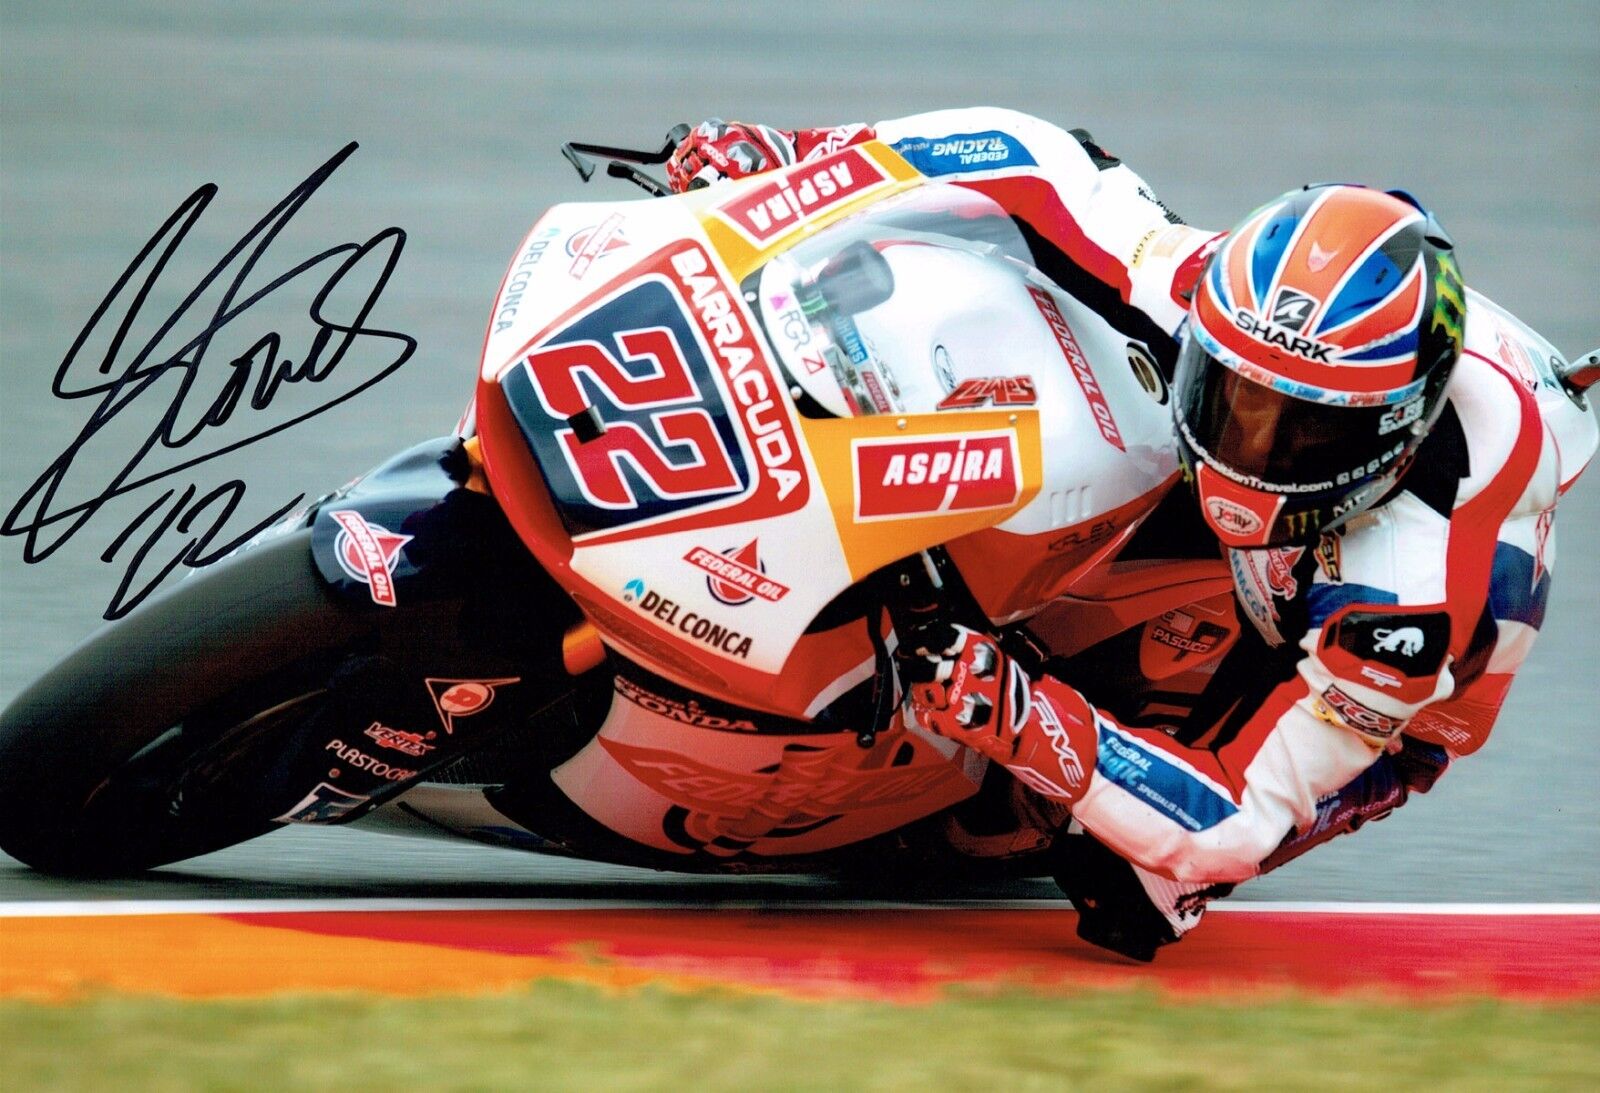 Sam LOWES SIGNED British MOTO2 Aspira Rider Autograph 12x8 RACE Photo Poster painting AFTAL COA